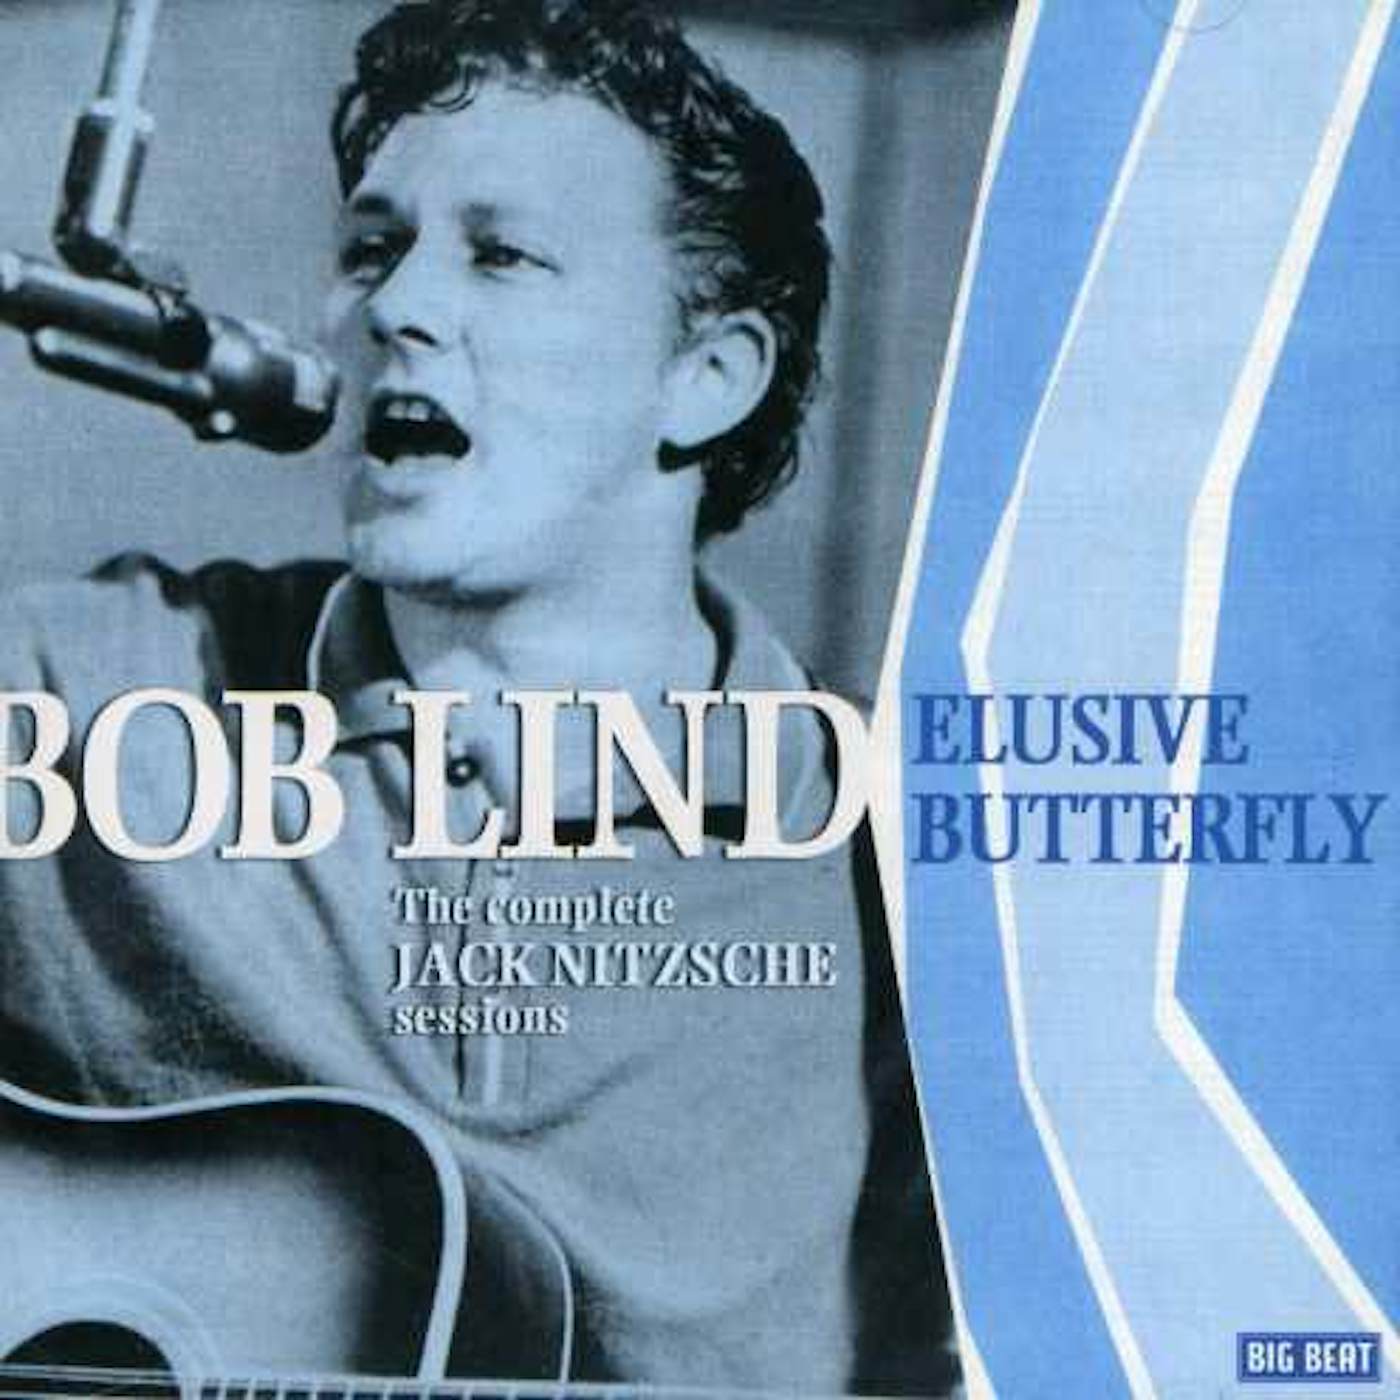 Bob Lind ELUSIVE BUTTERFLY: COMPLETE 1966 JACK NITZSCHE CD